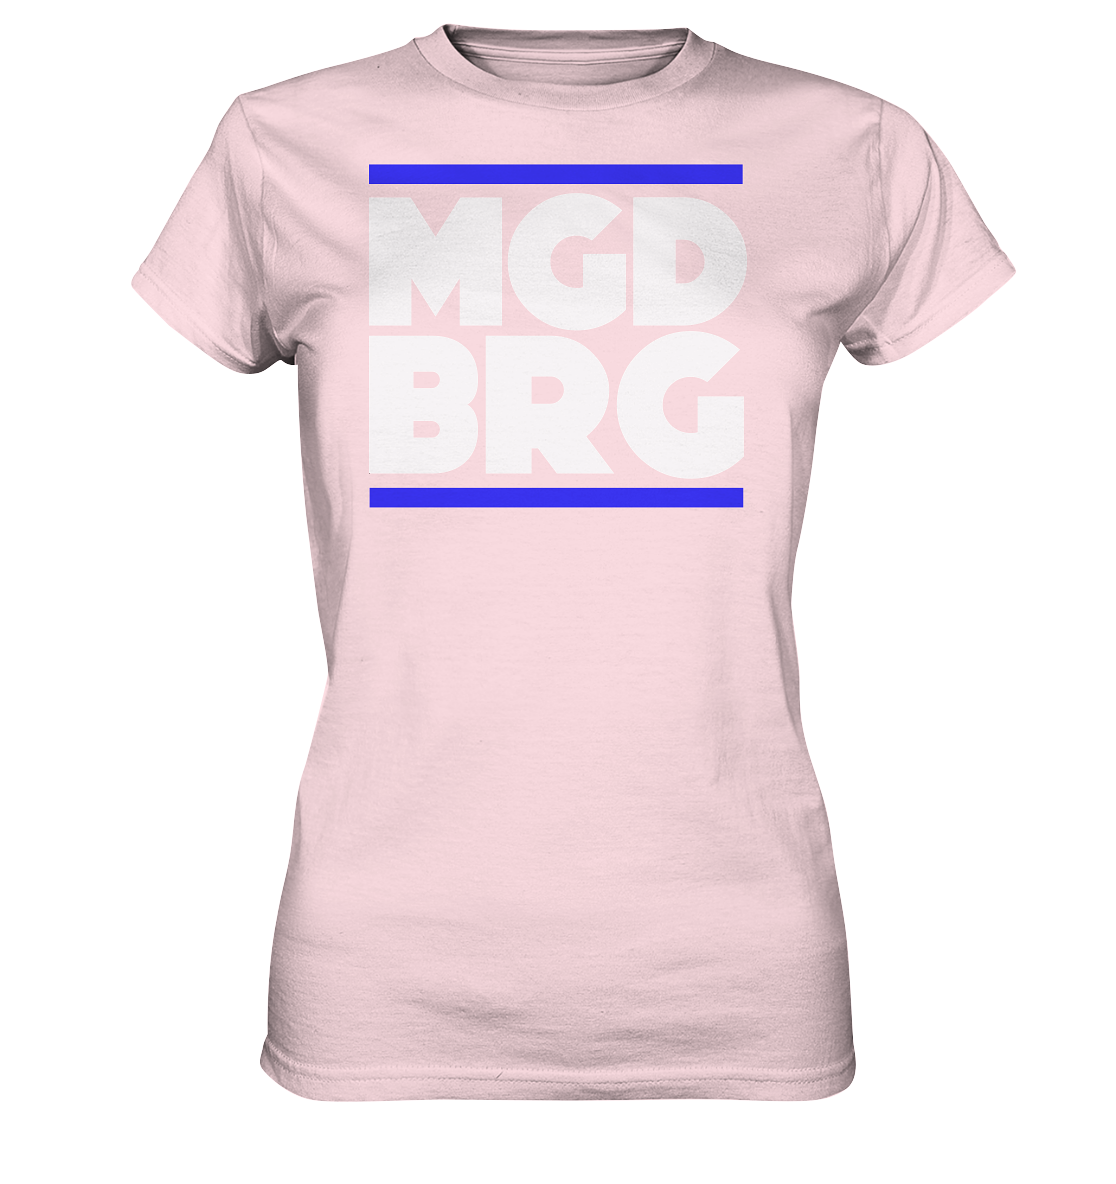 MGDBRG - Ladies Premium Shirt